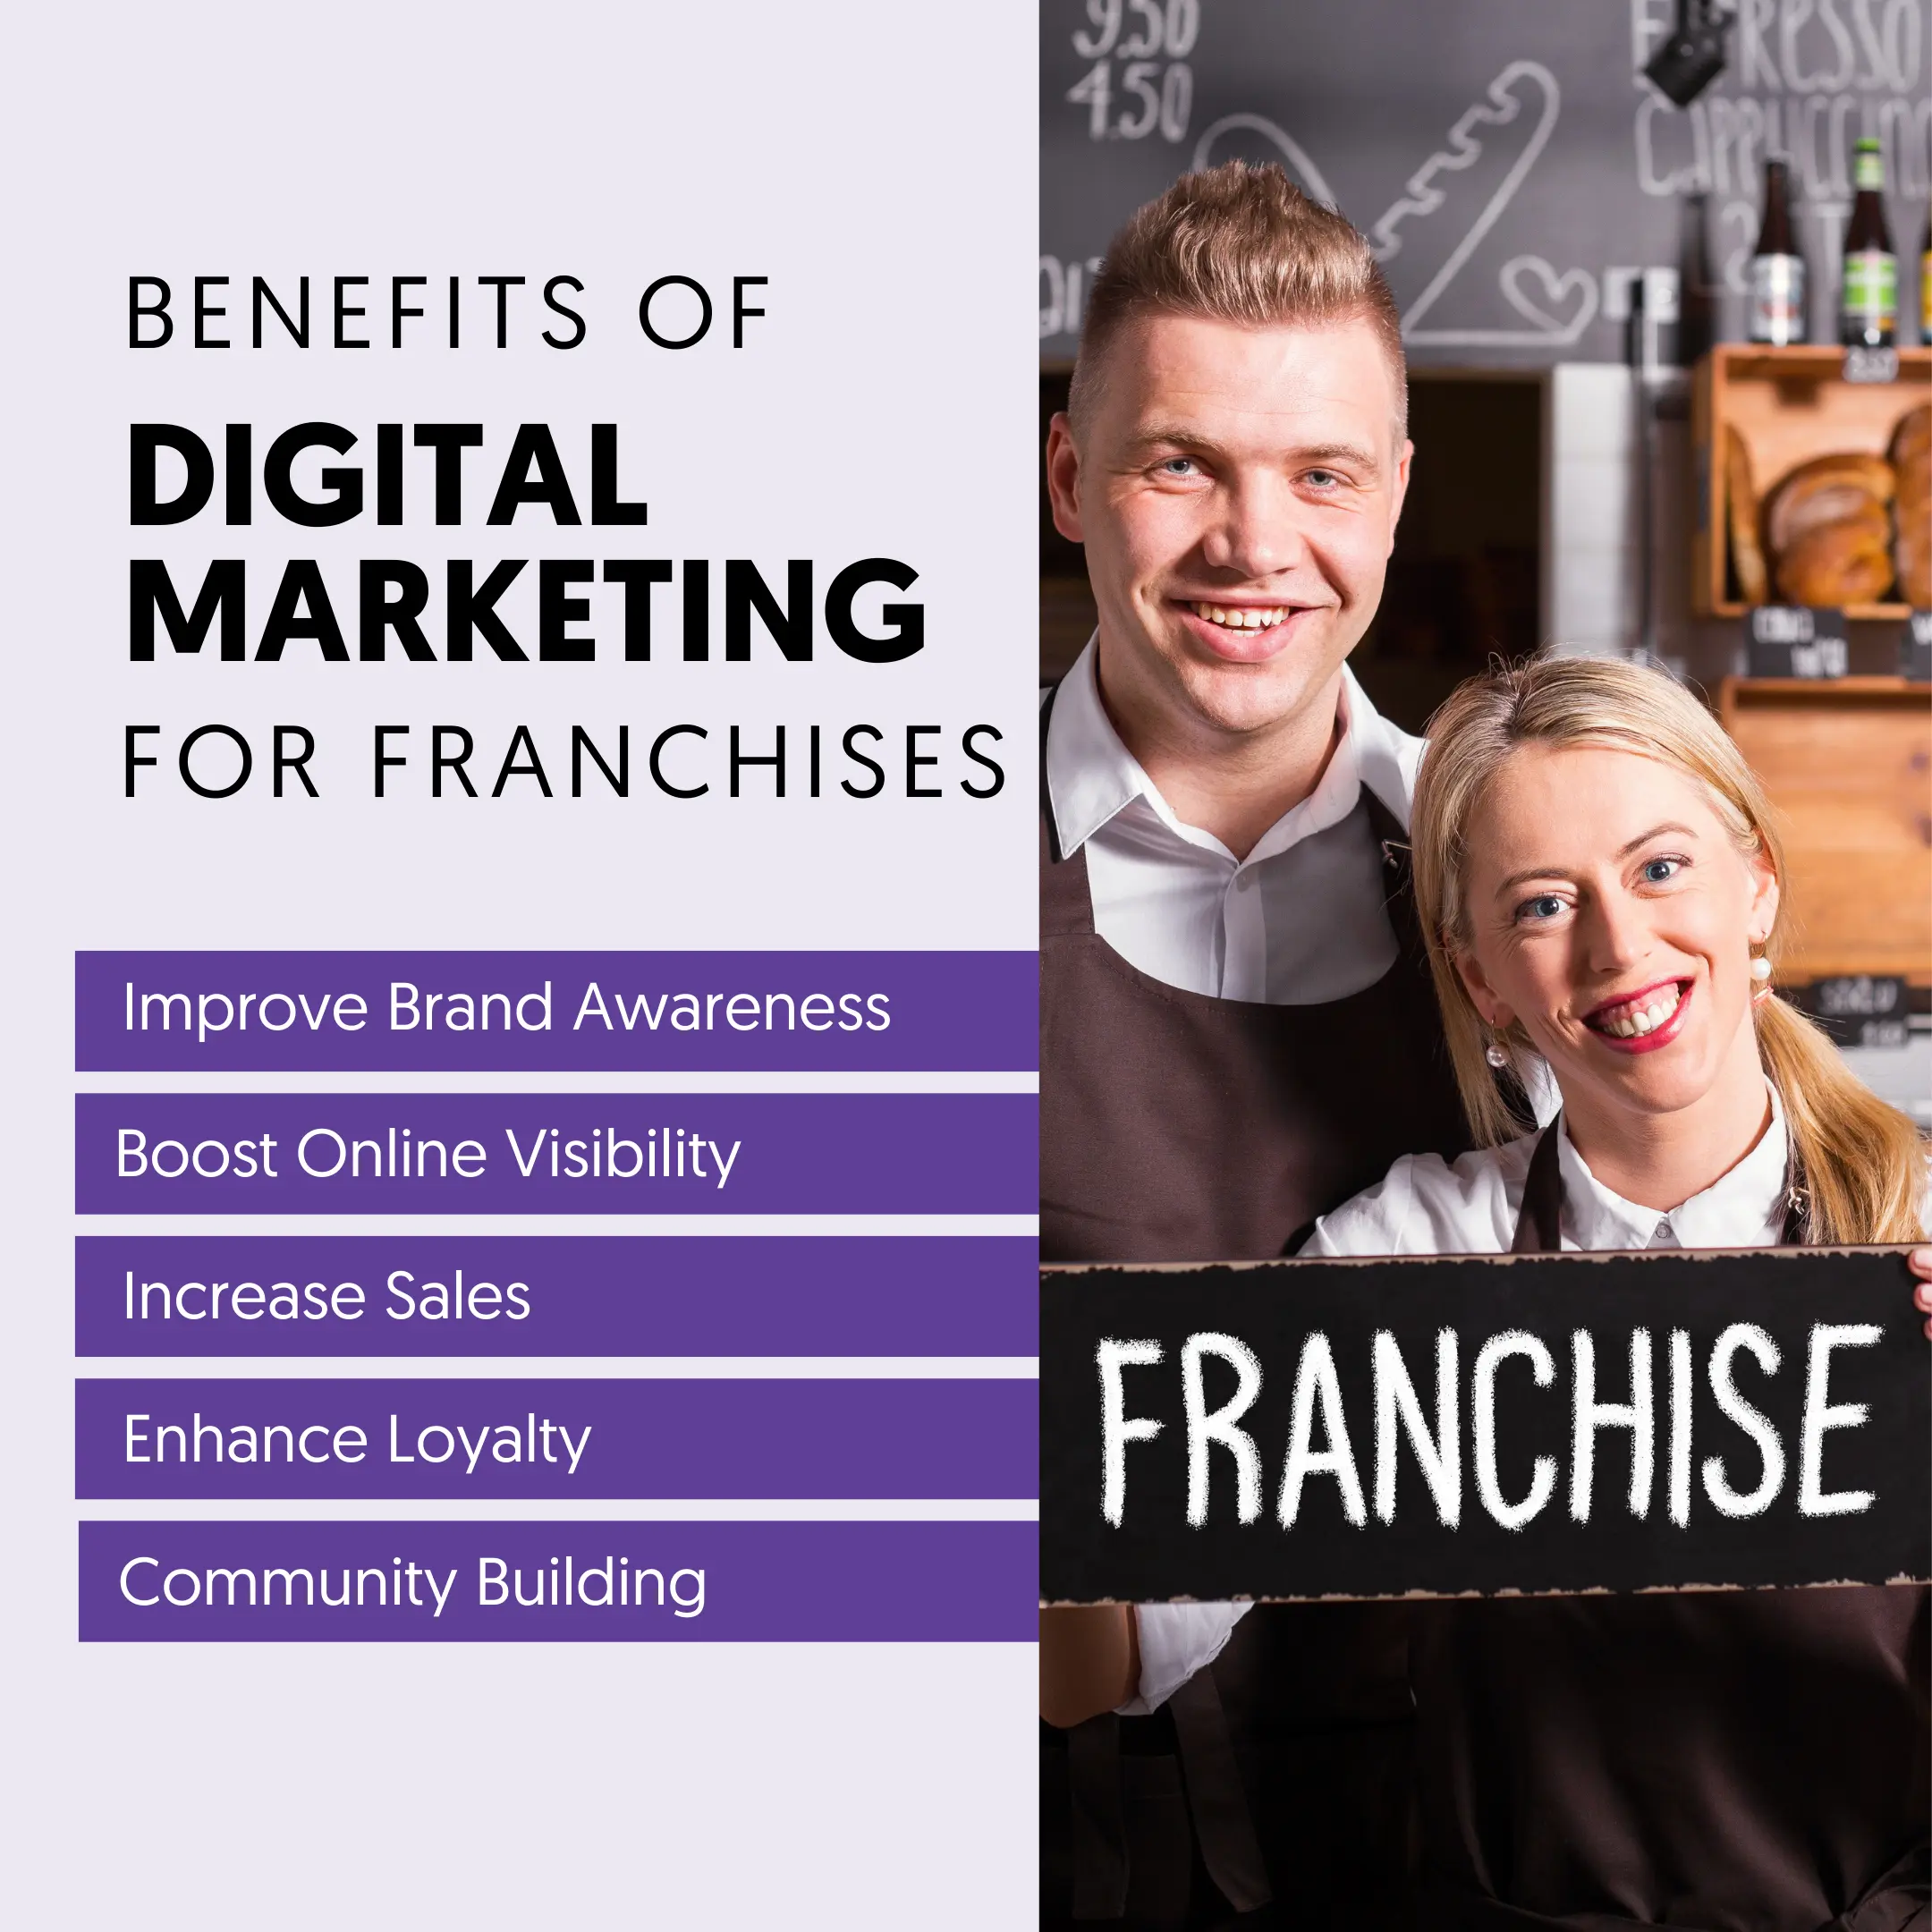 Franchise Digital Marketing Benefits